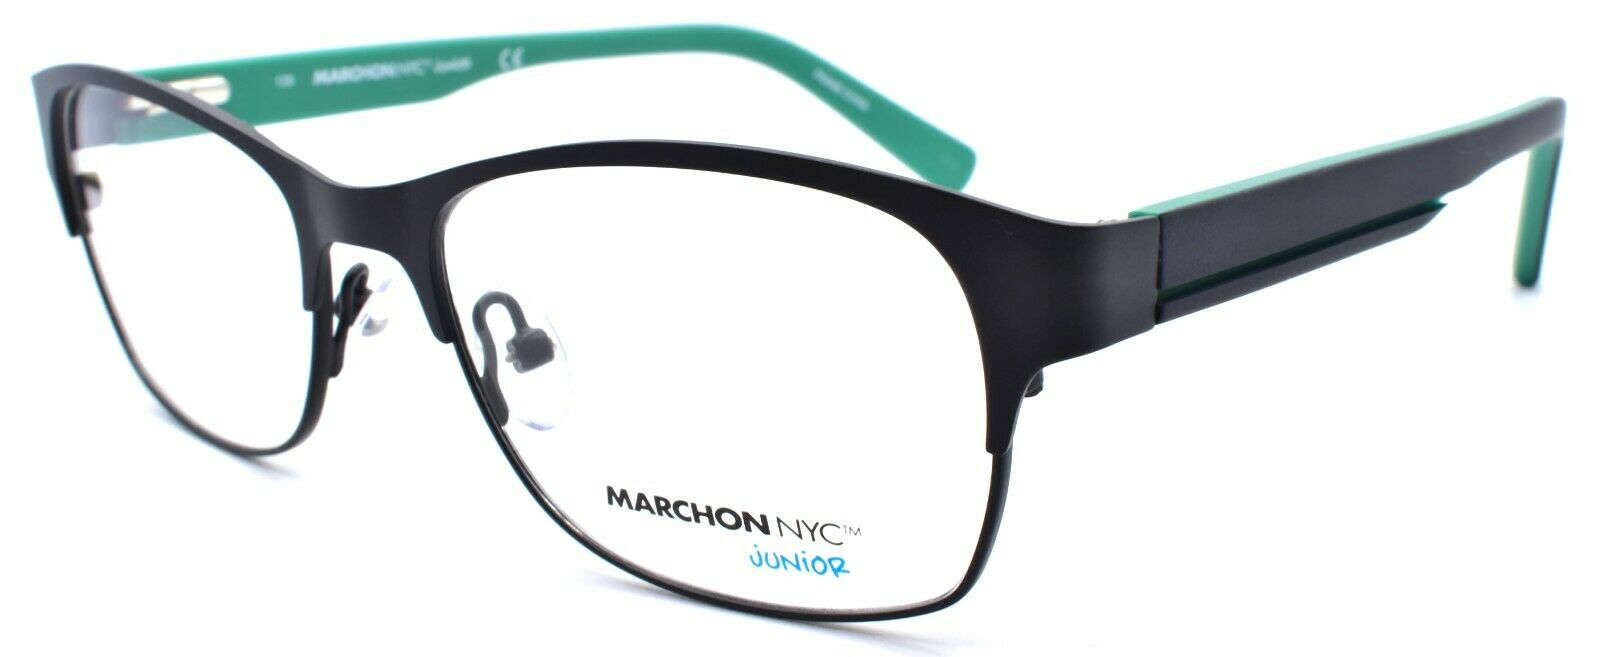 1-Marchon Junior M-6000 001 Kids Boys Eyeglasses Frames 50-16-135 Black-886895402521-IKSpecs